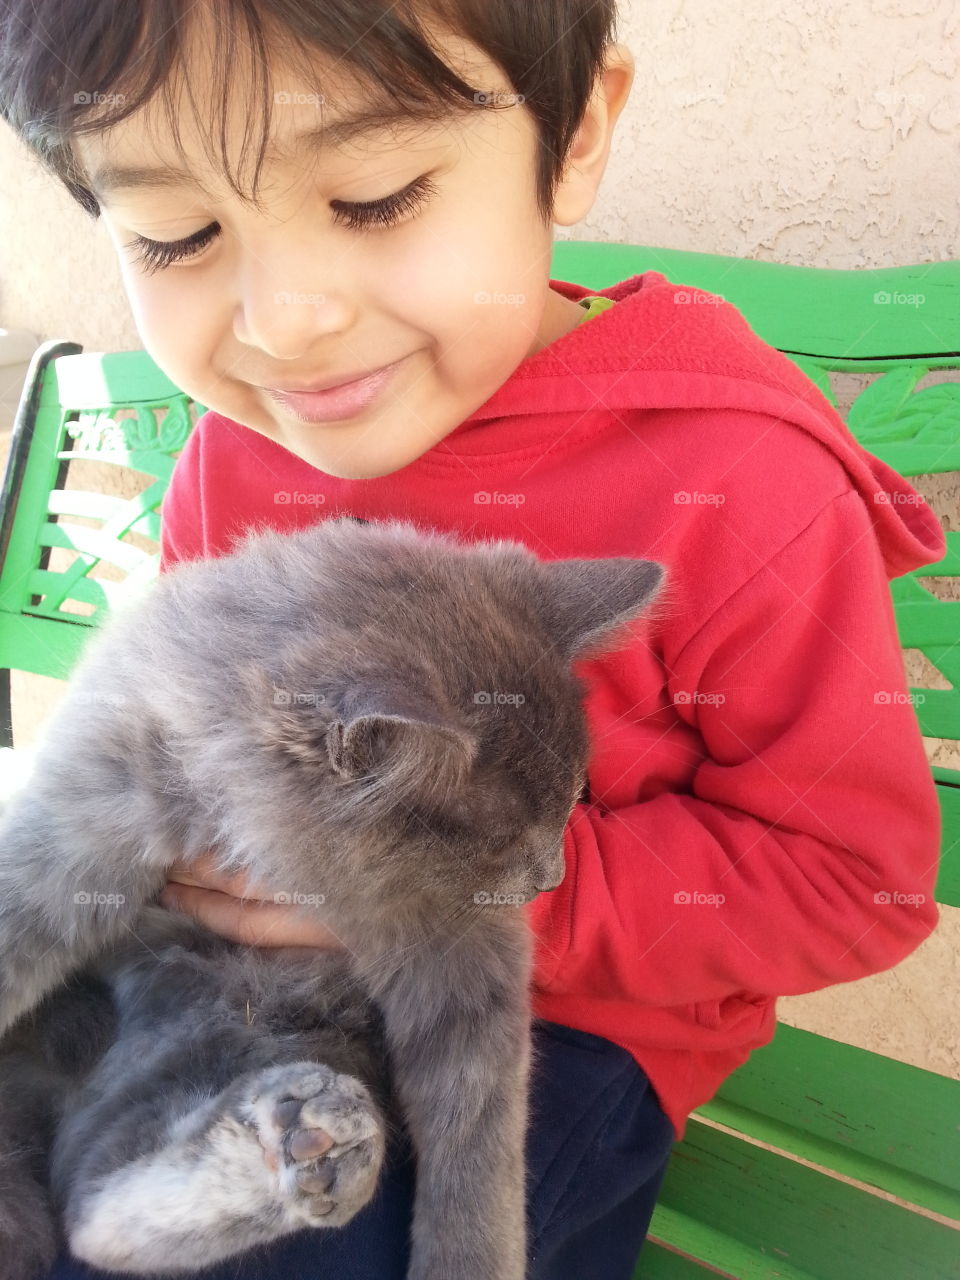 holding a kitty. boy holding a fluffy cat